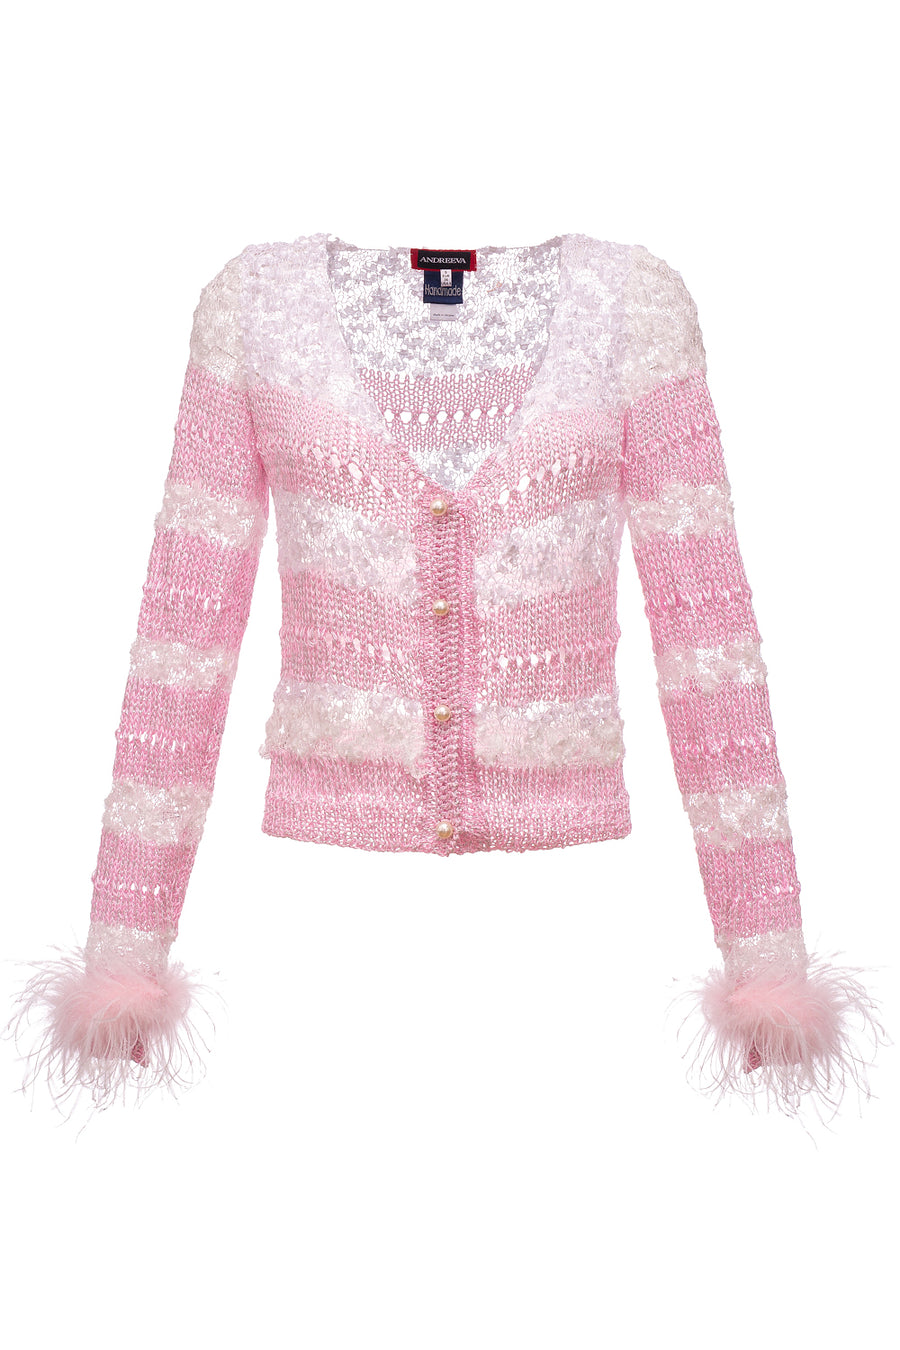 andreeva pink handmade knit sweater